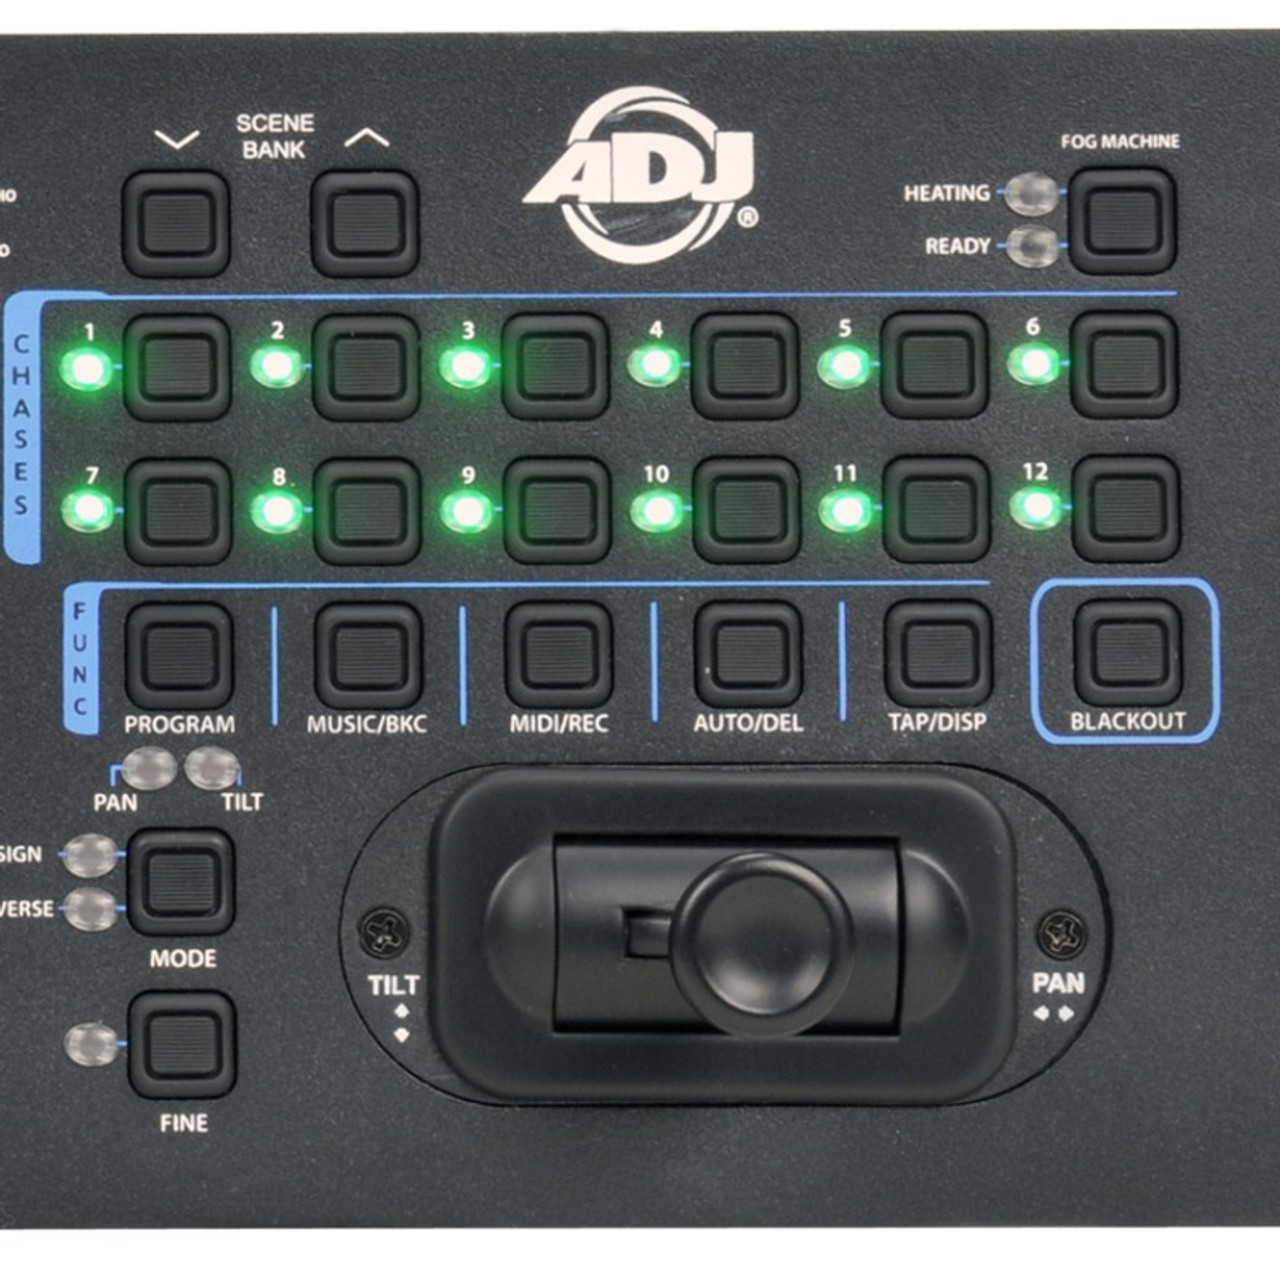 American DJ DMX Operator 384 DMX Controller